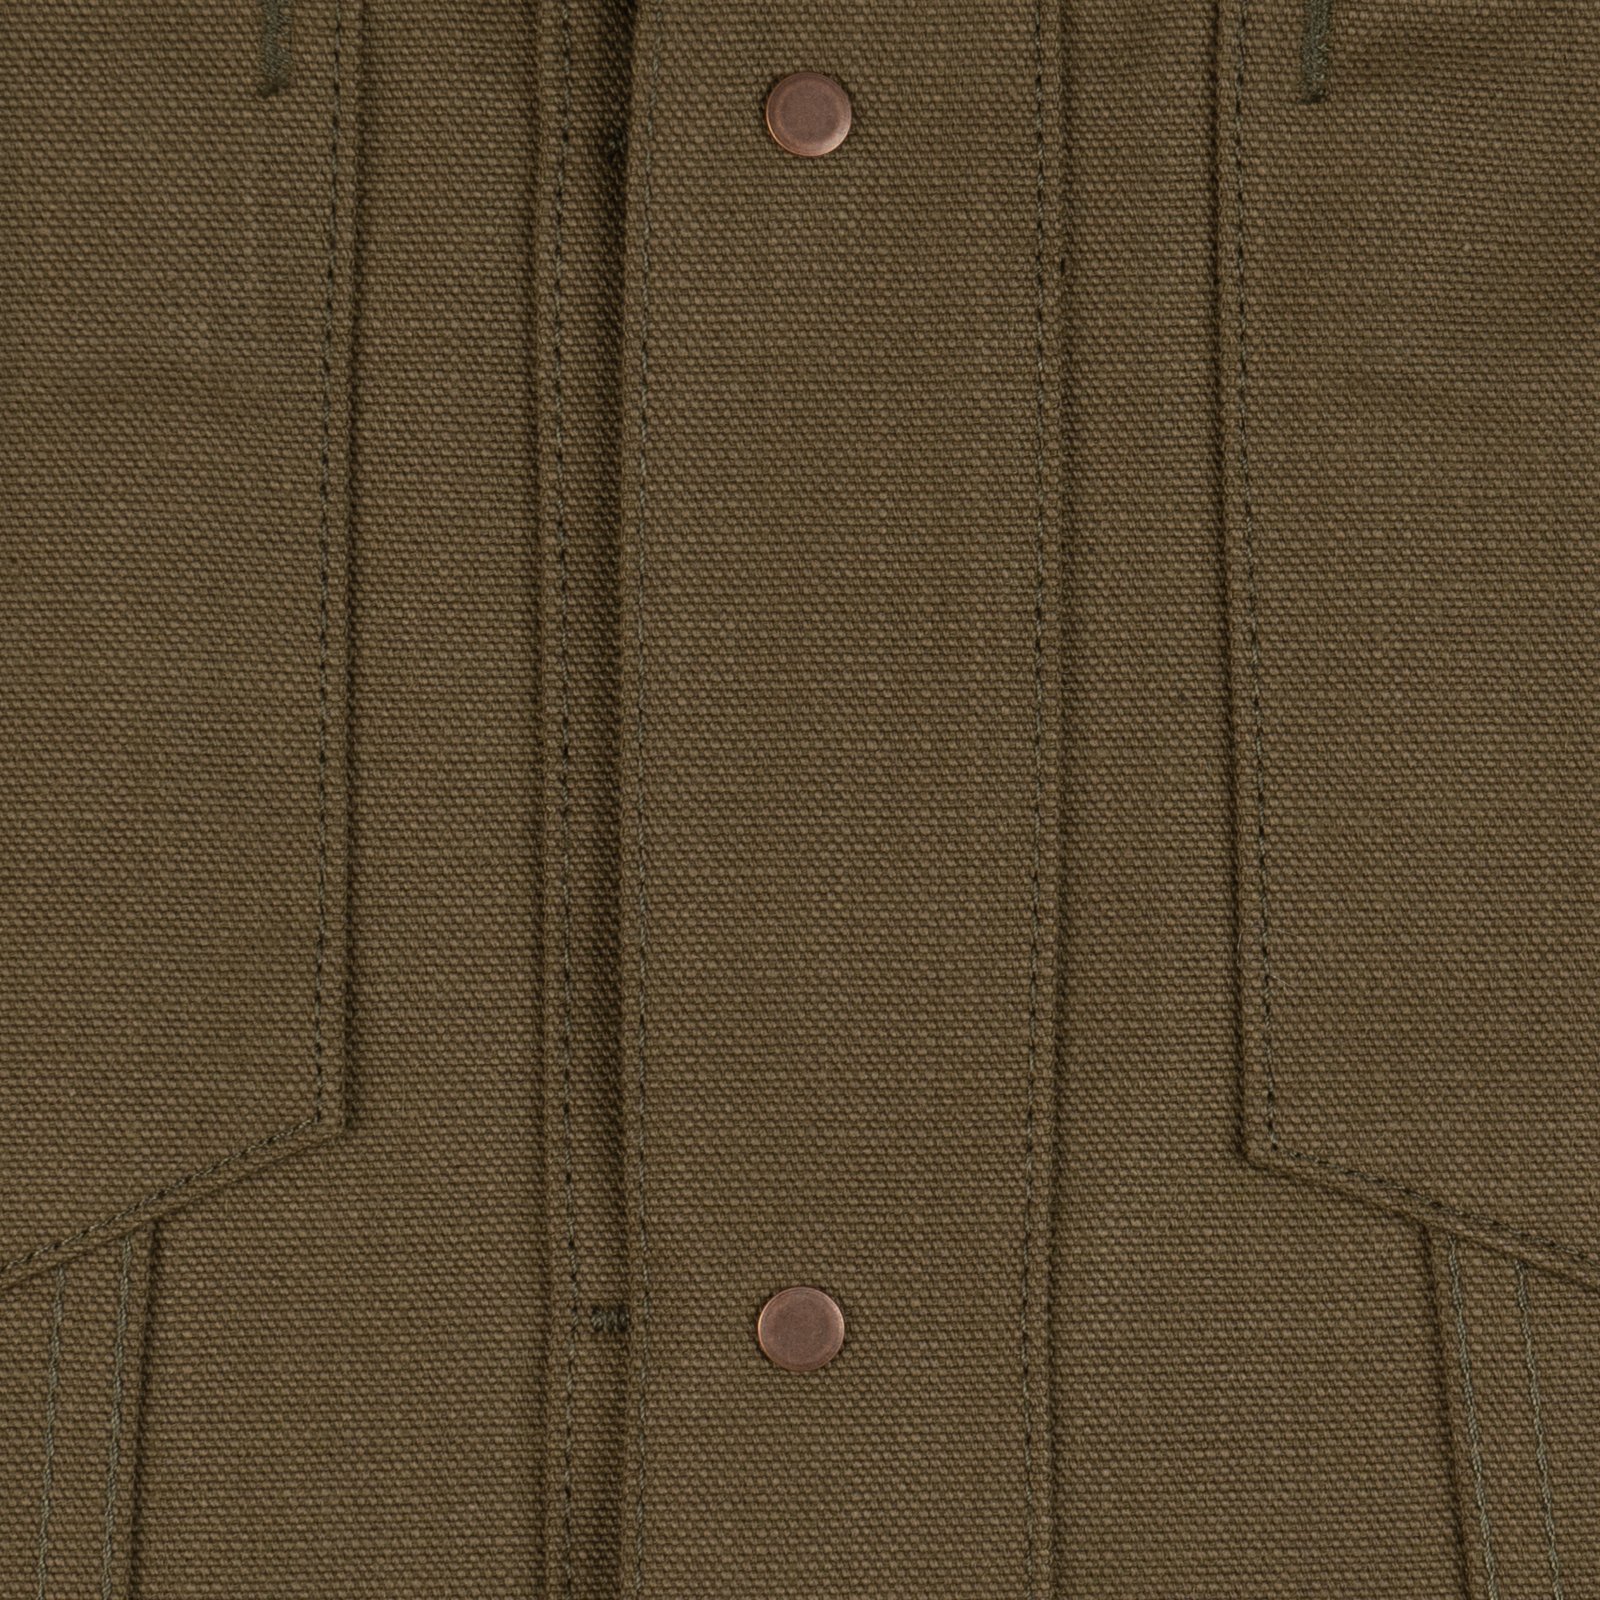  Denim Jacket - Raw Cotton Canvas - Olive - closeup interior 